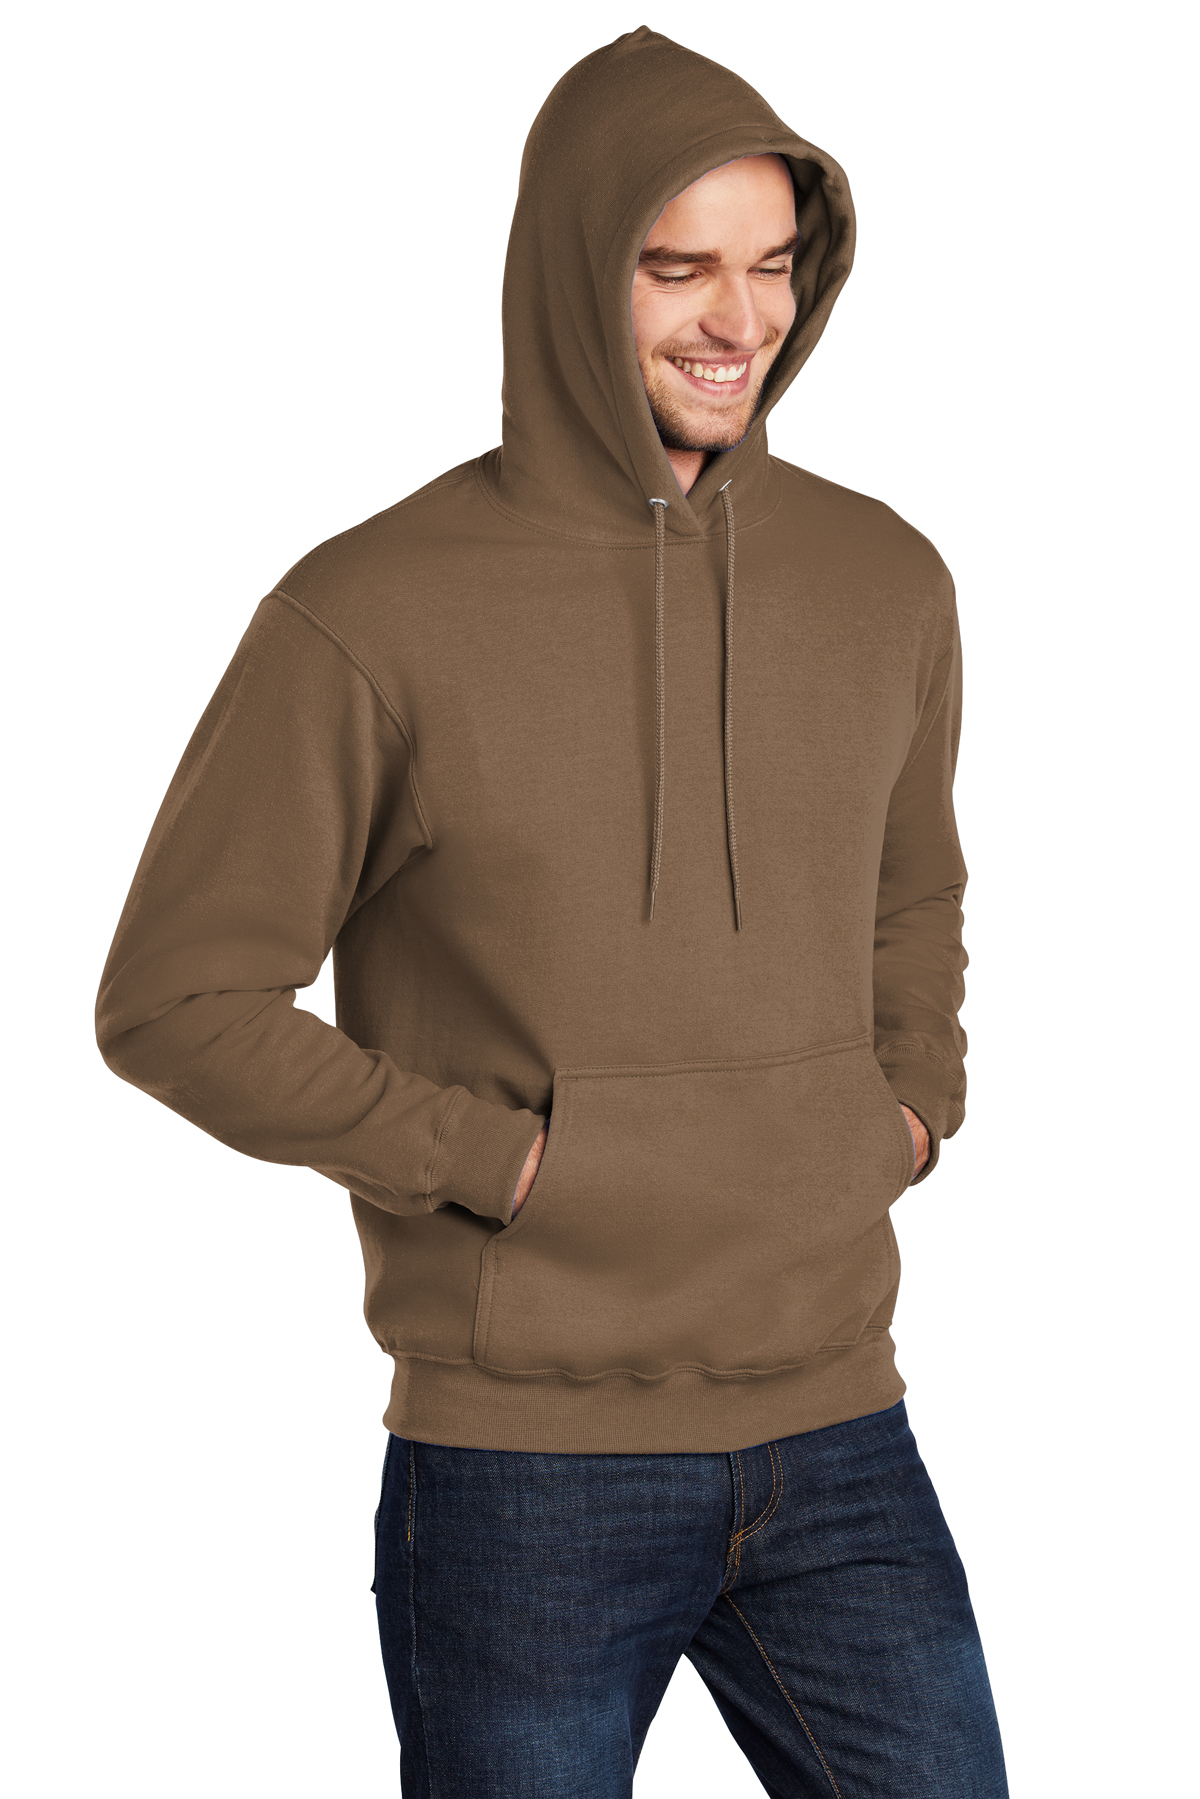 & Product Pullover Sweatshirt Company Fleece Port Core Company Port | | & Hooded